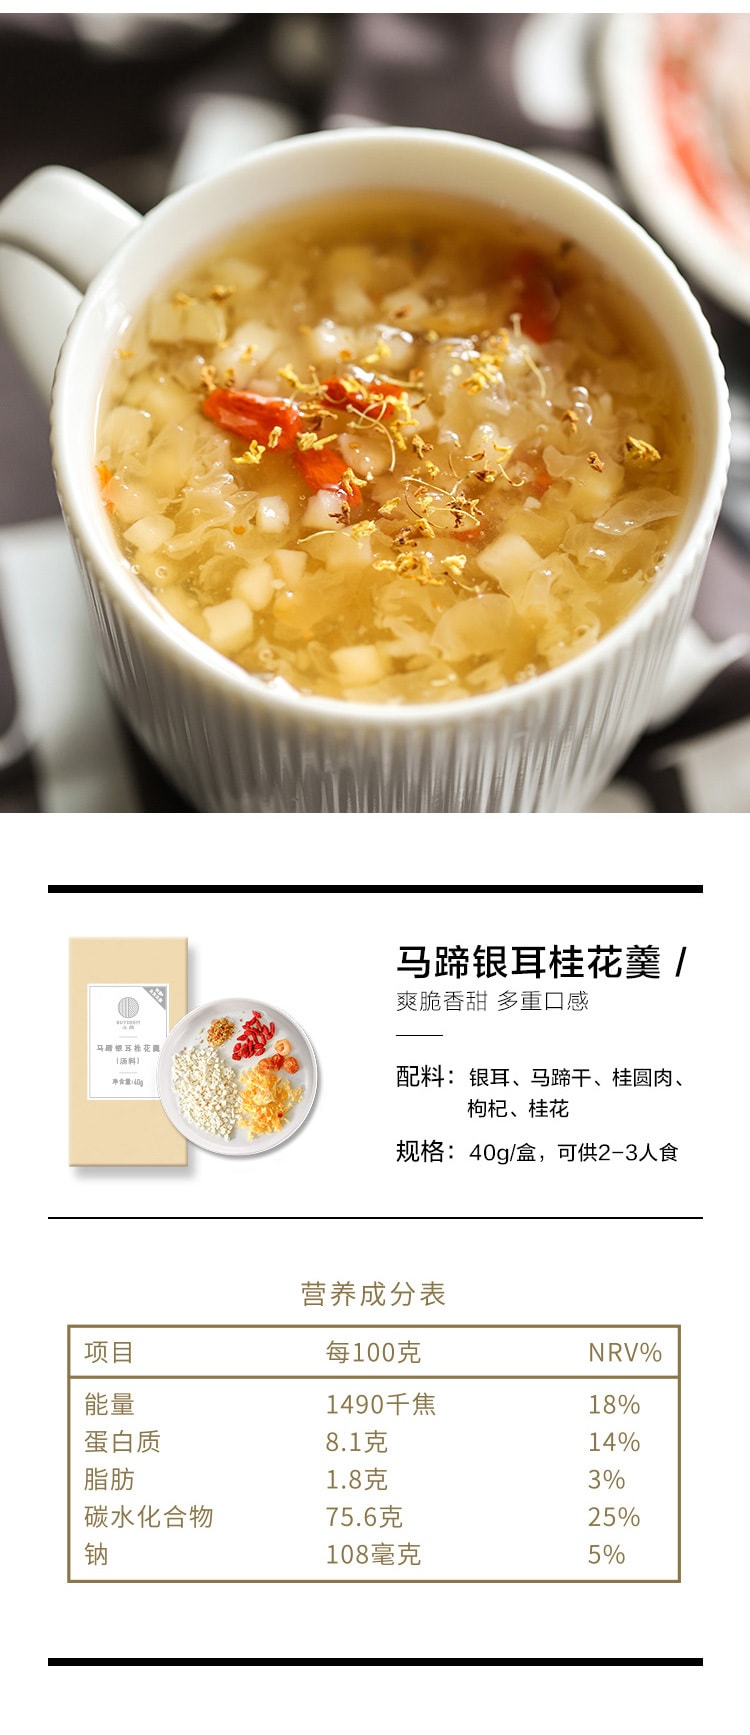 Chinese tremella soup set 4 boxes